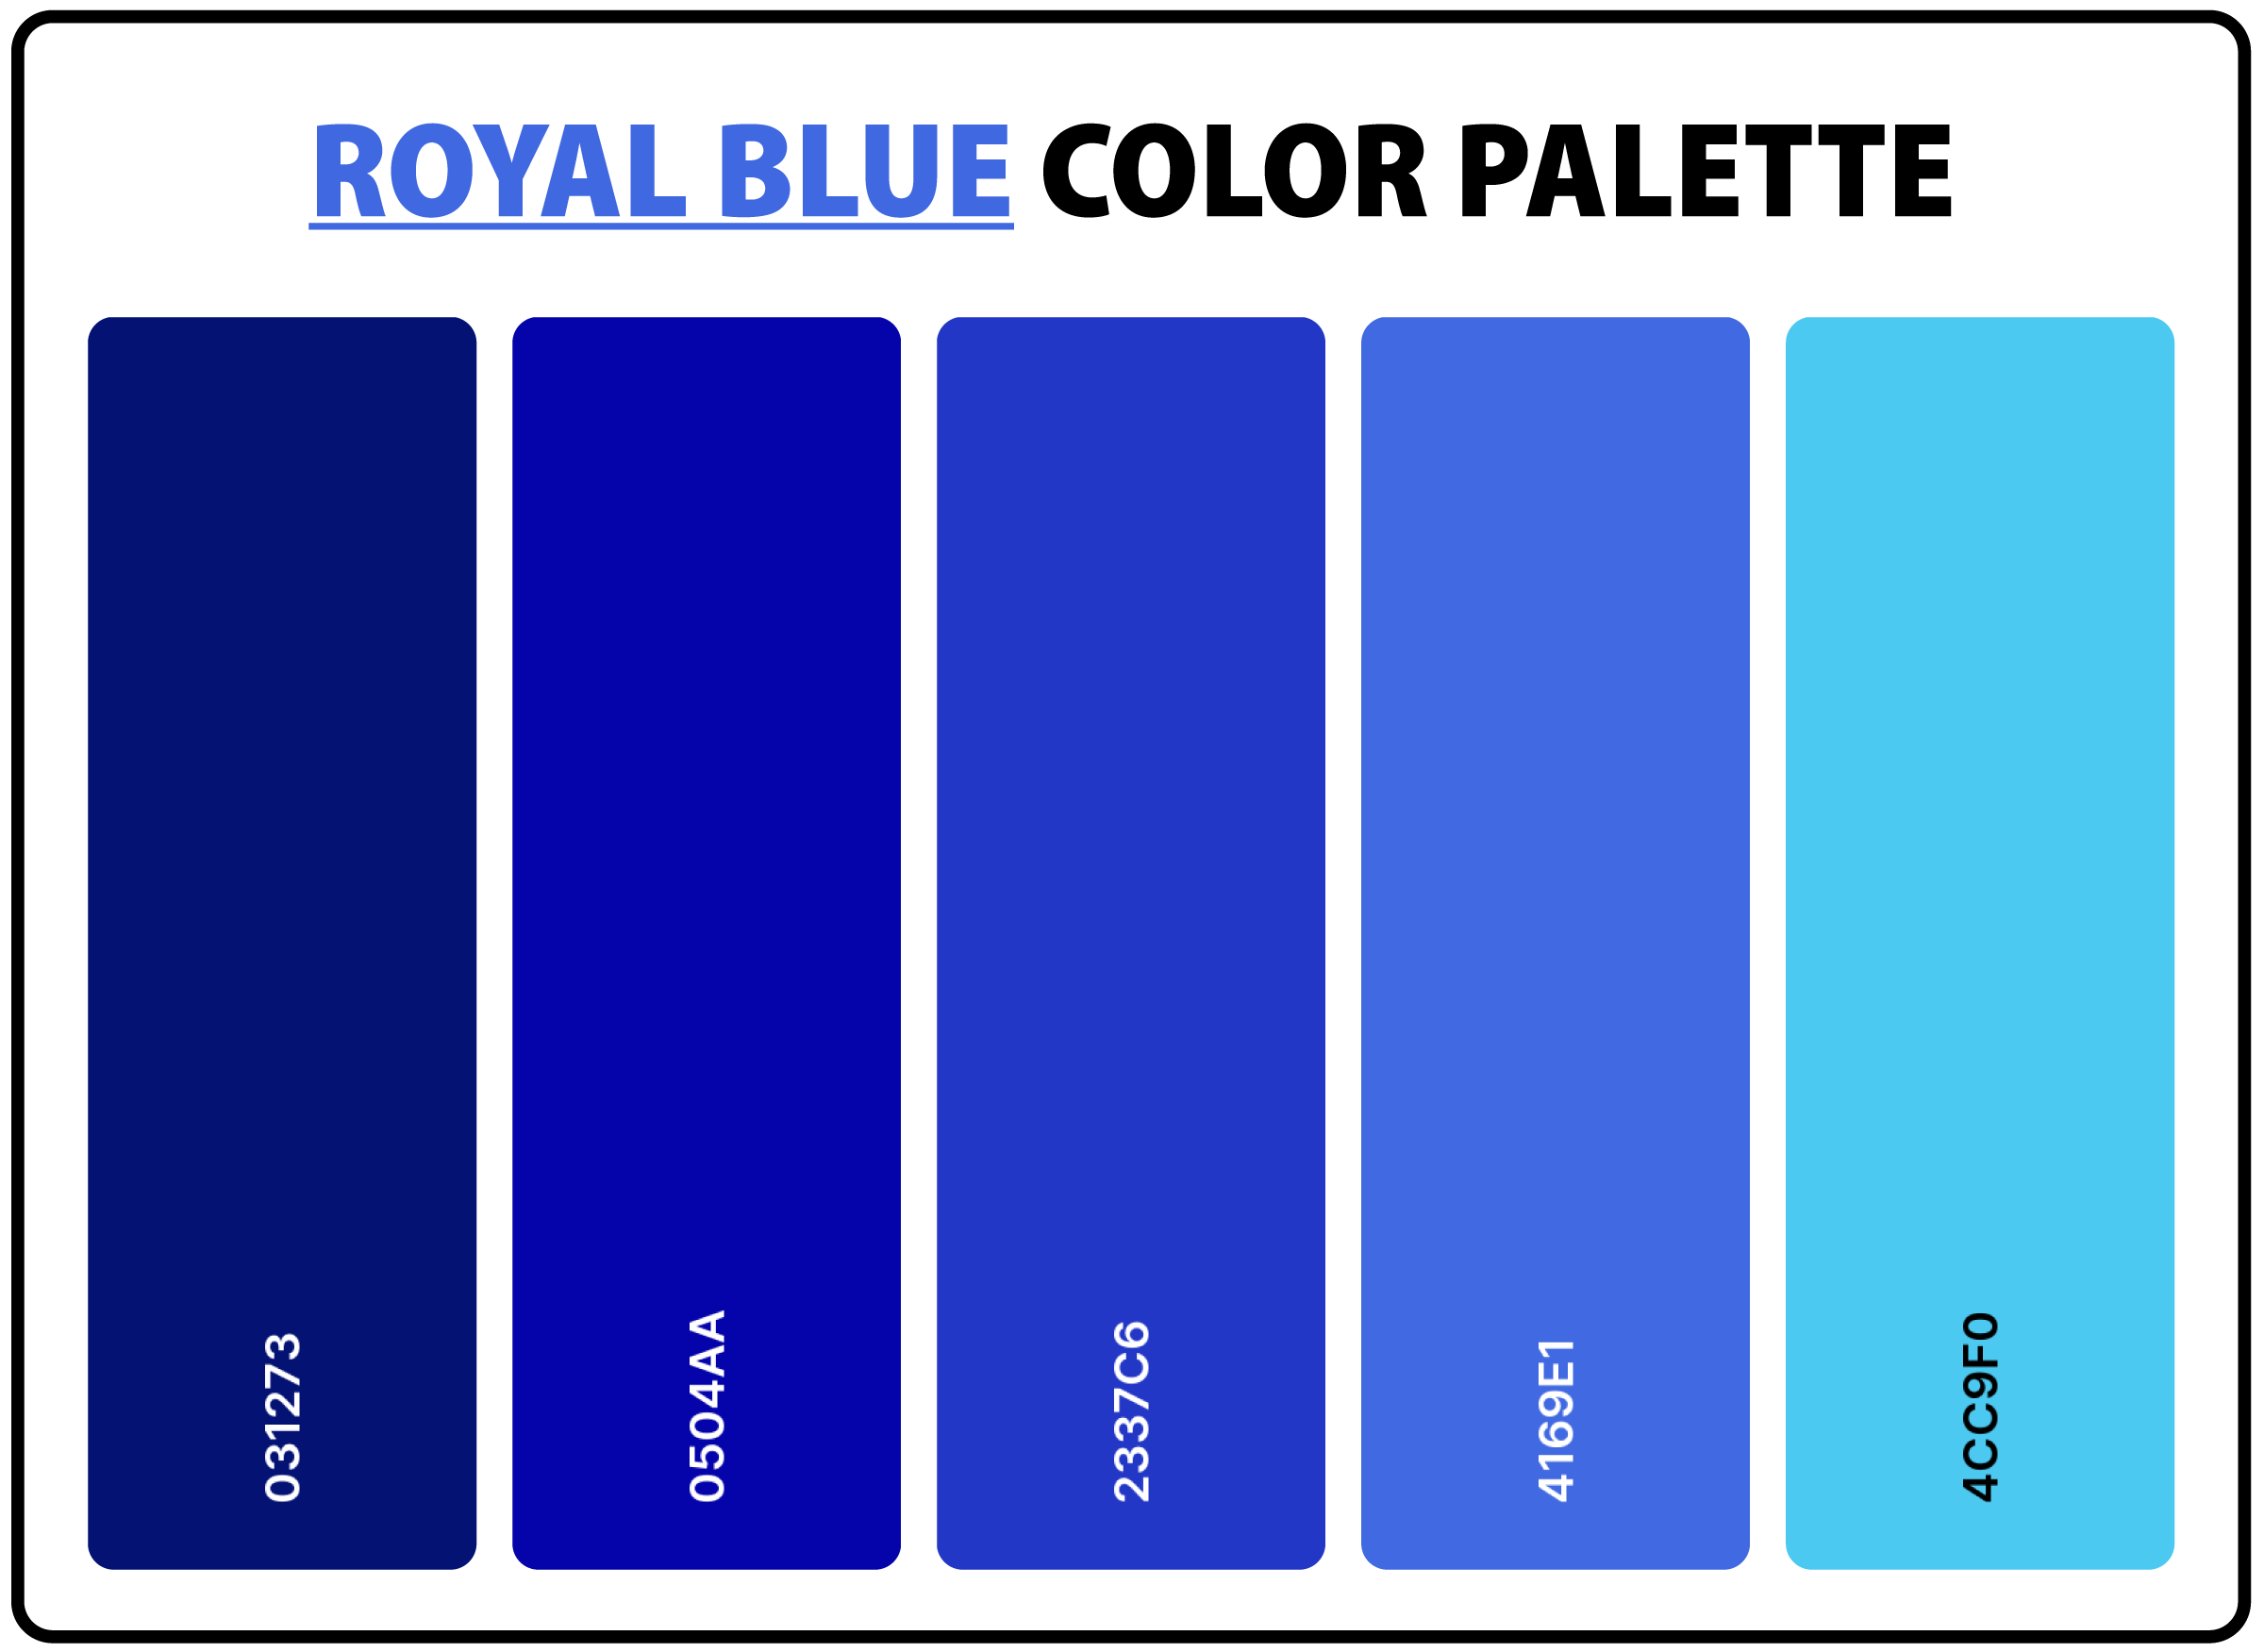 Royal-Blue-Color-Palette-with-Hex-Codes